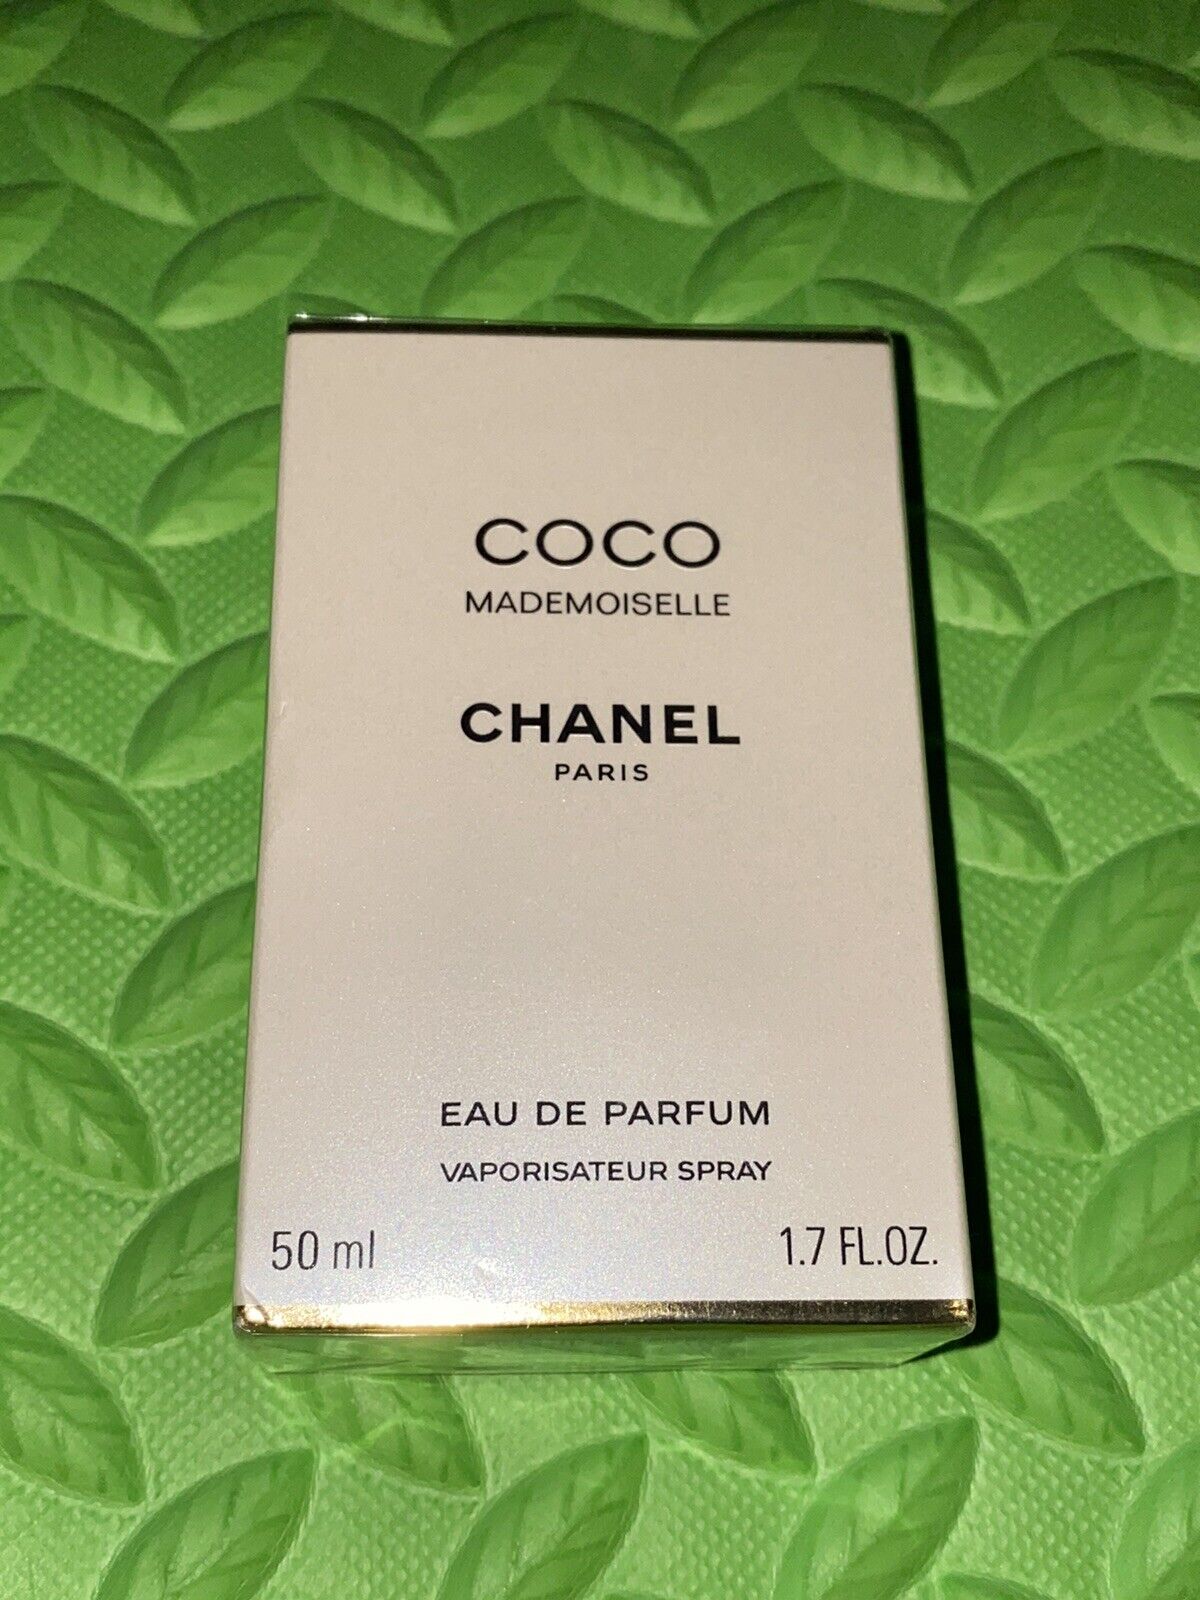 Chanel Coco Mademoiselle Eau de Toilette For Women 1.7 OZ 50 ML